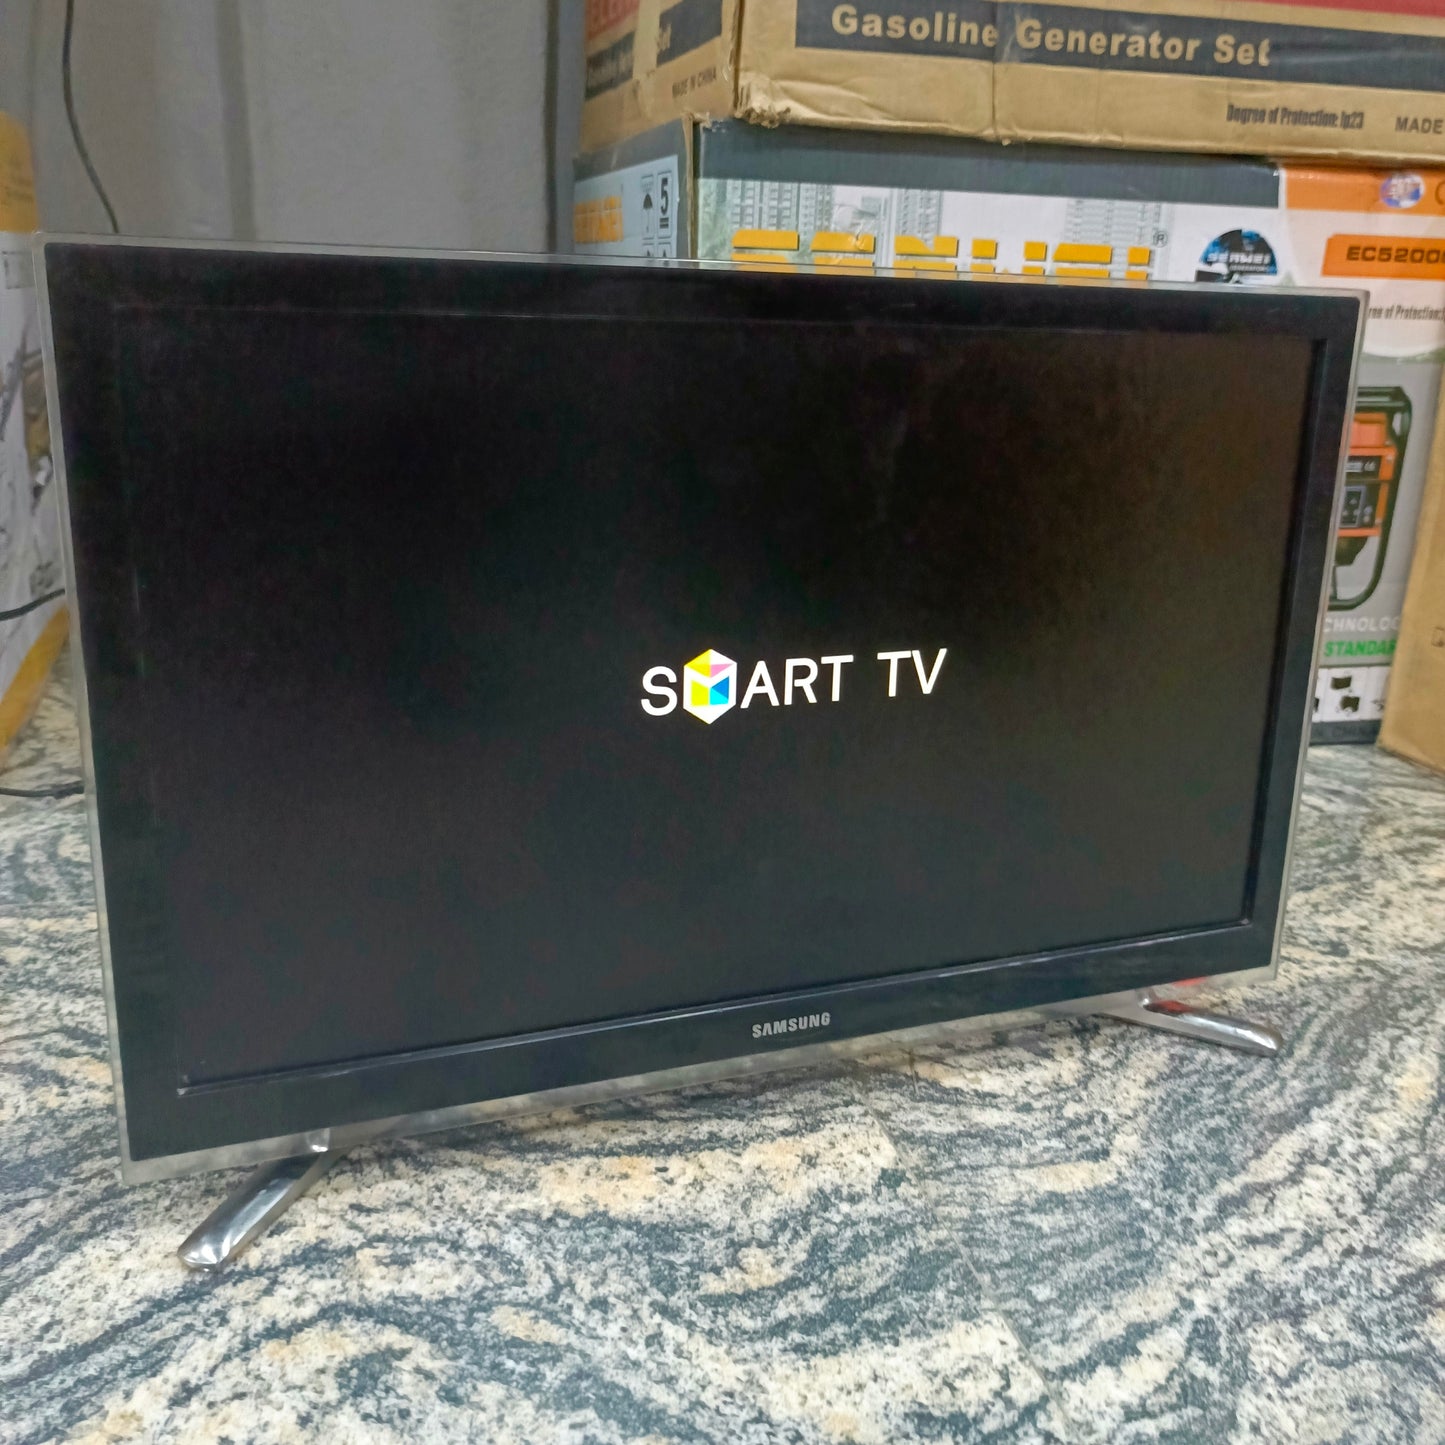 SAMSUNG 22 Inch UE22F5400AK Series 5 Smart (Built-in WiFi) Full HD LED TV - Smart TV logo on screen